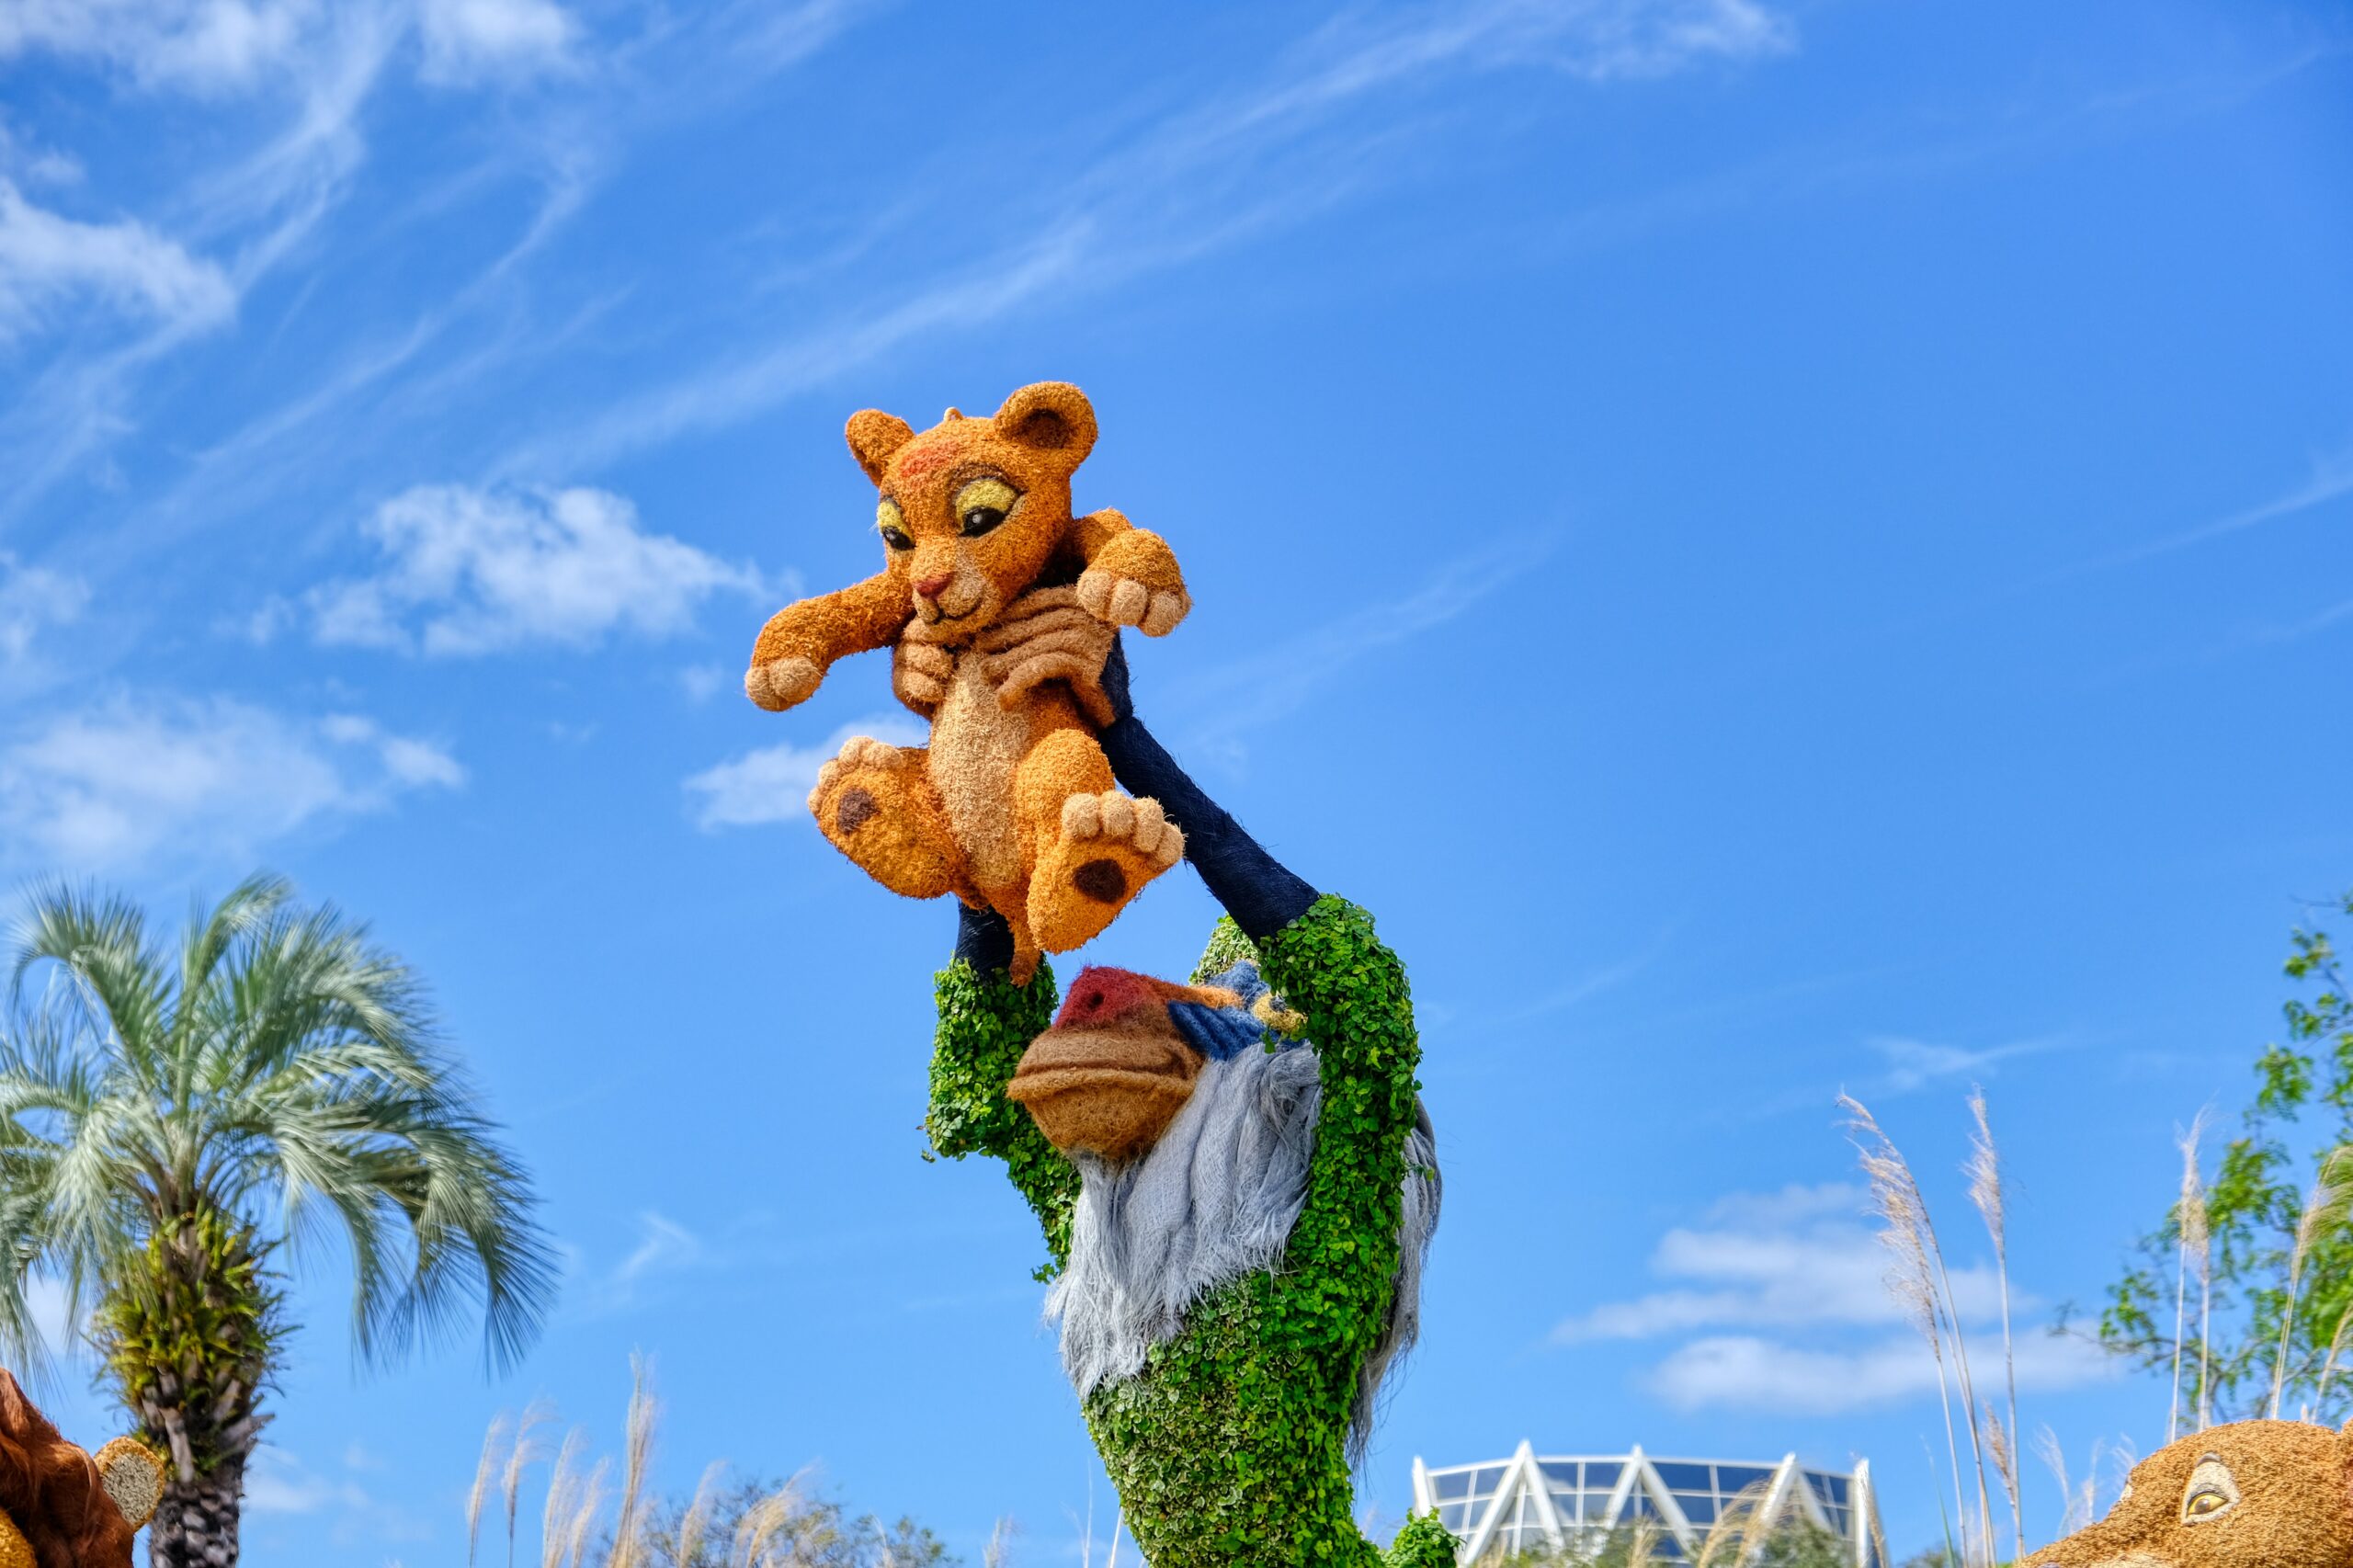 Simba is held aloft by Rafiki